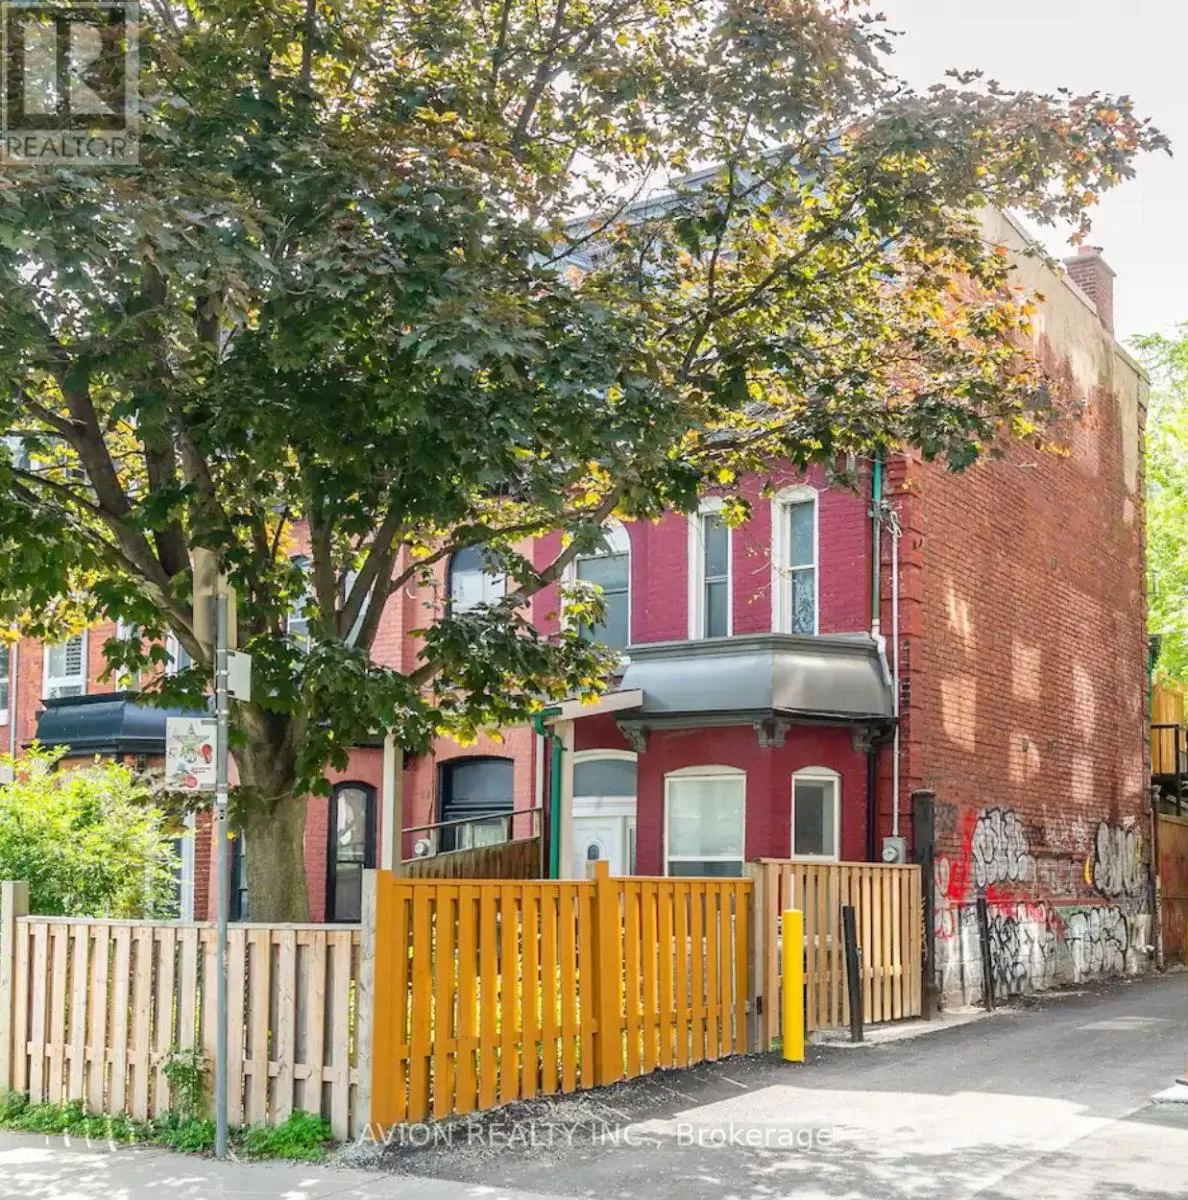 Row / Townhouse for rent: 83 Sullivan Street, Toronto, Ontario M5T 1C2